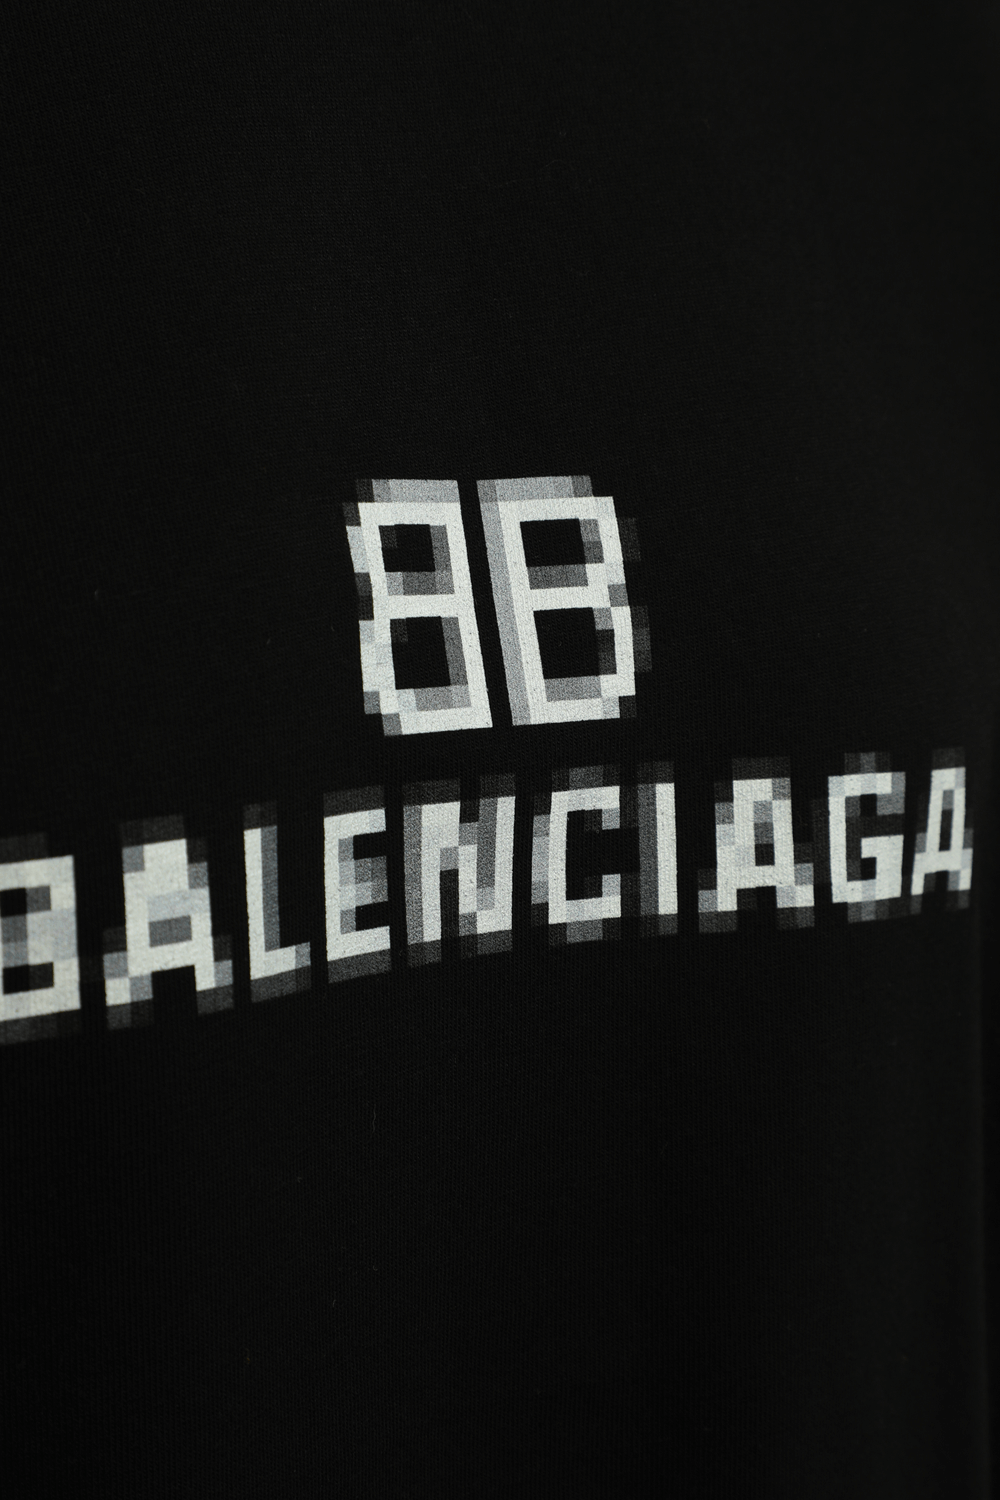 BB Pixel Tshirt in Black BALENCIAGA